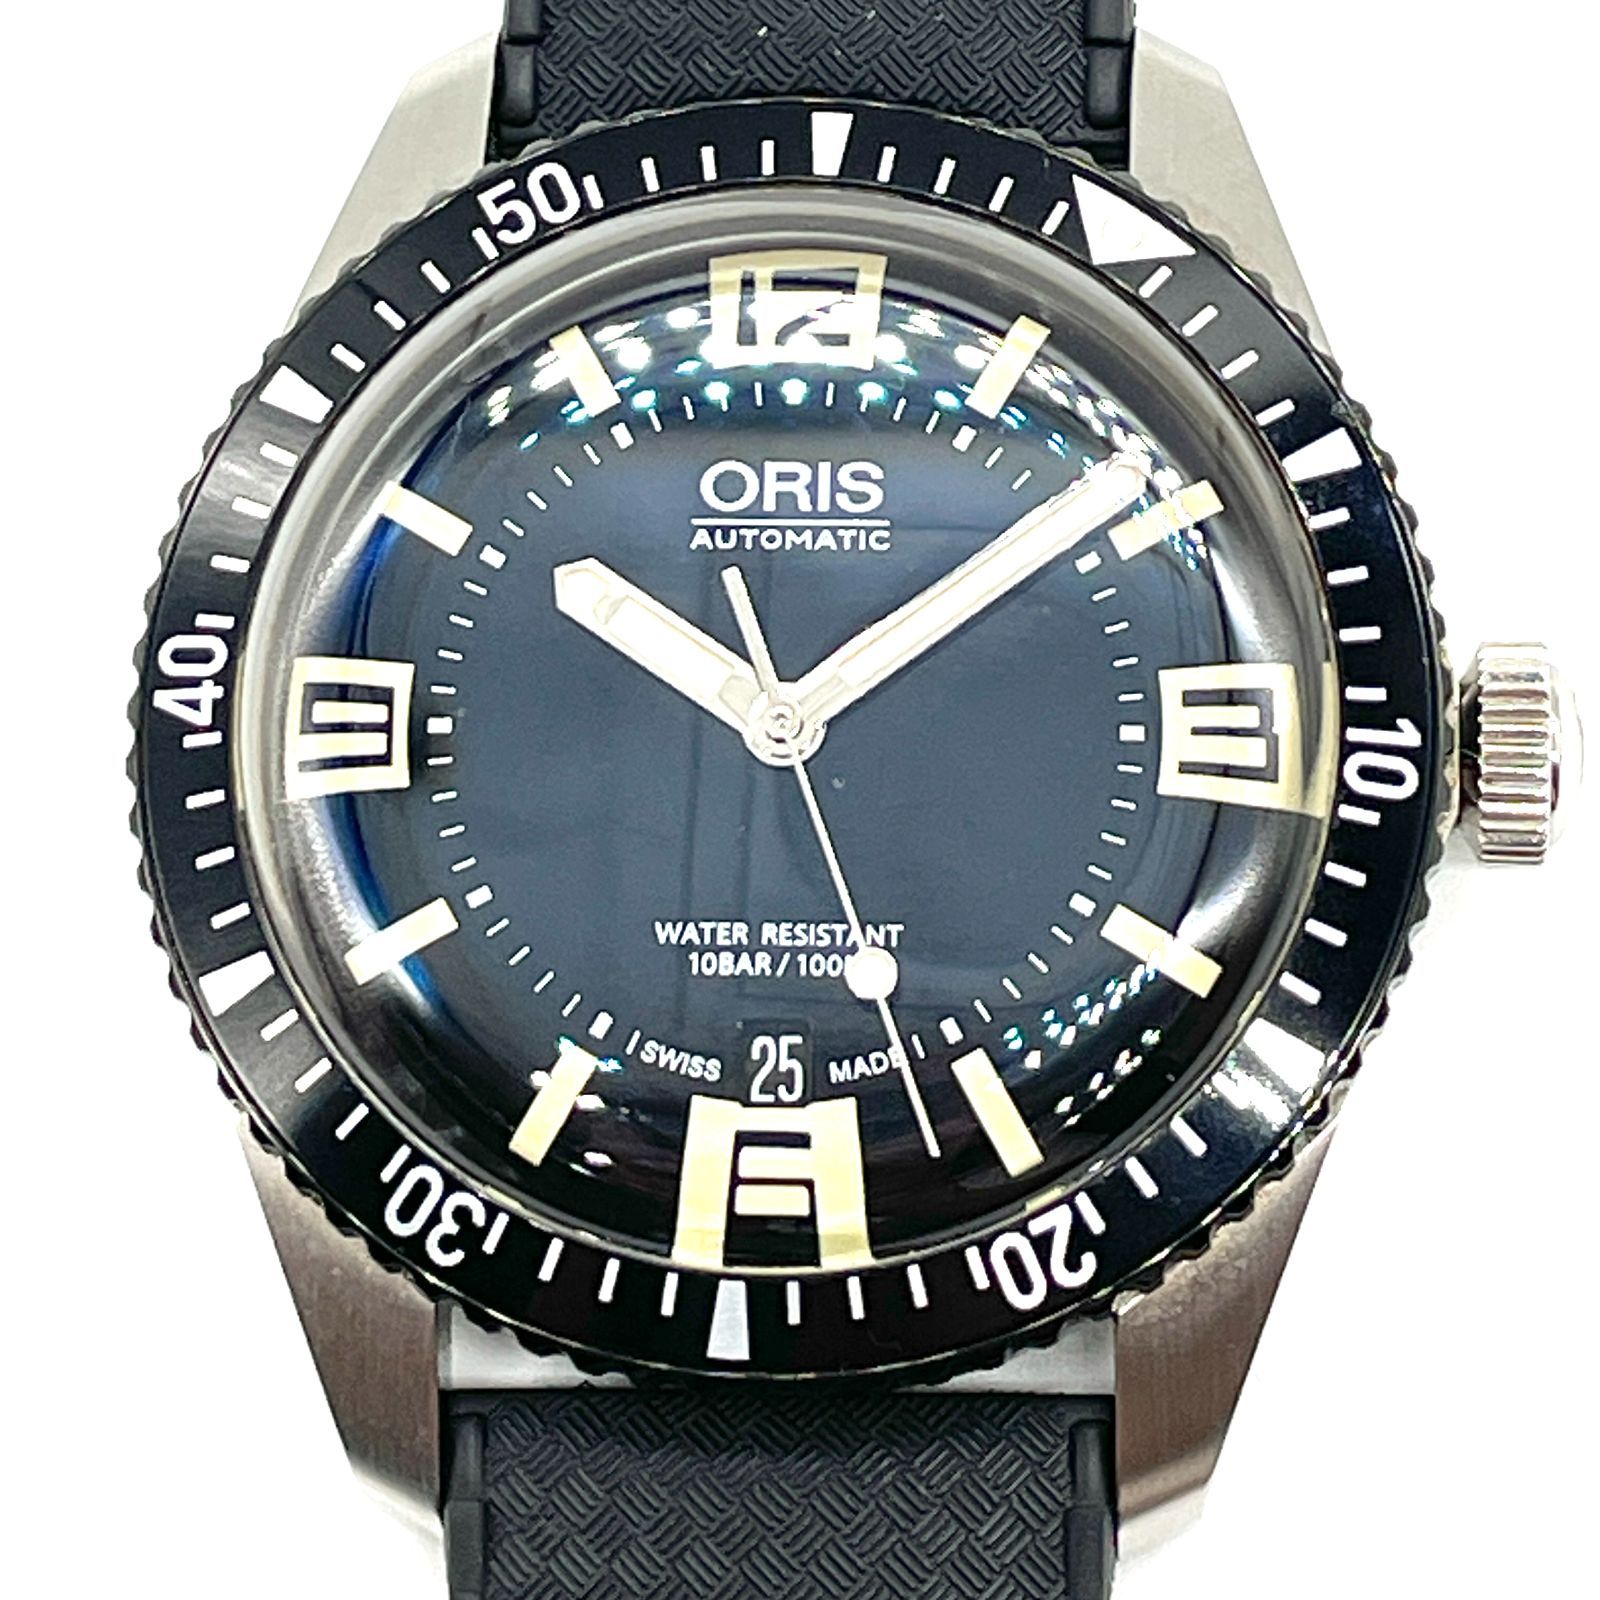 ORIS オリス ダイバーズ65 AUTOMATIC 自動巻き 腕時計 01.733.7707.4064.R アナログ ウォッチ ラバーベルト  ブラック シルバー 逆回転防止ベゼル デイト WATER RESIST 10BAR/100M 7077 - メルカリ